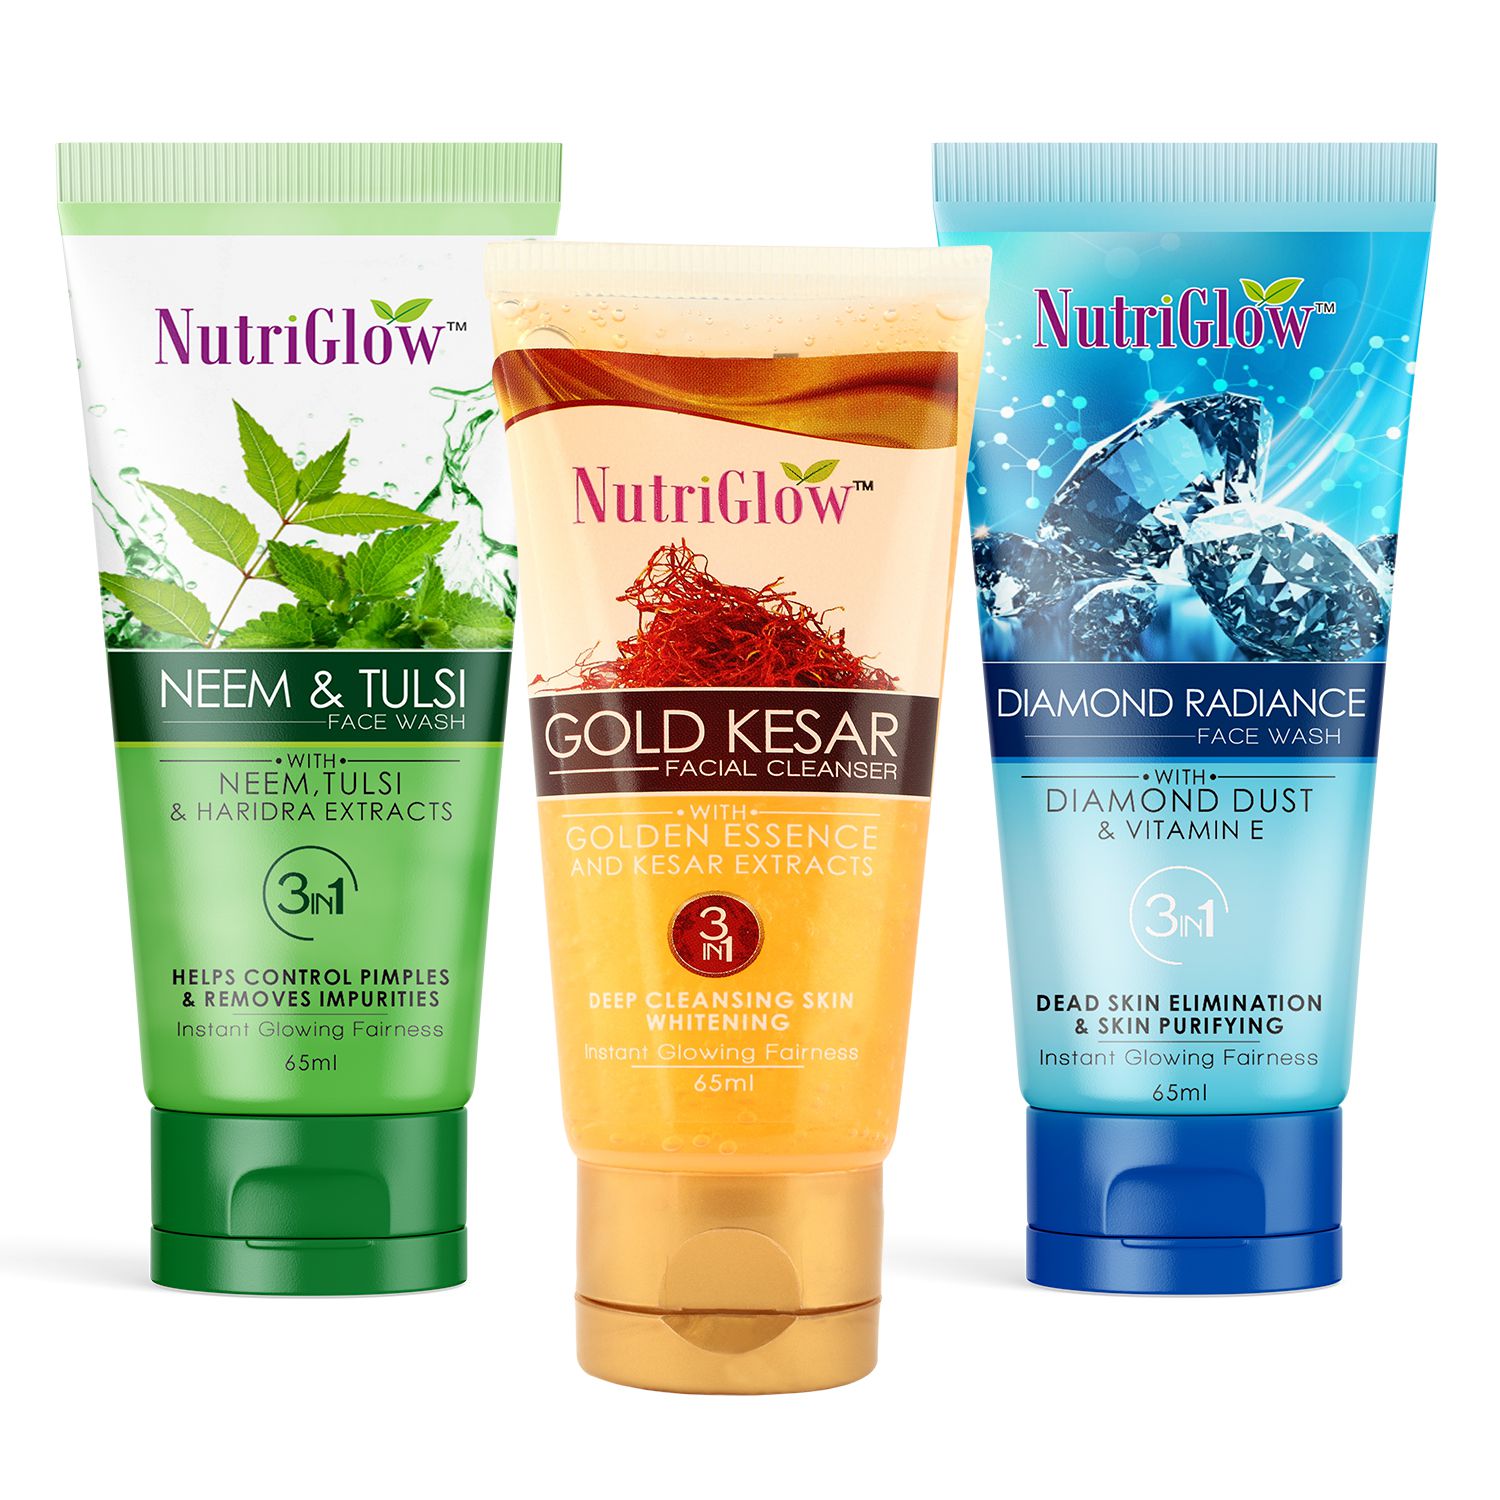     			Nutriglow Neem & Tulsi, Gold Kesar Facial cleanser, Diamond Radiance Face Wash Each 65mL (Pack of 3)